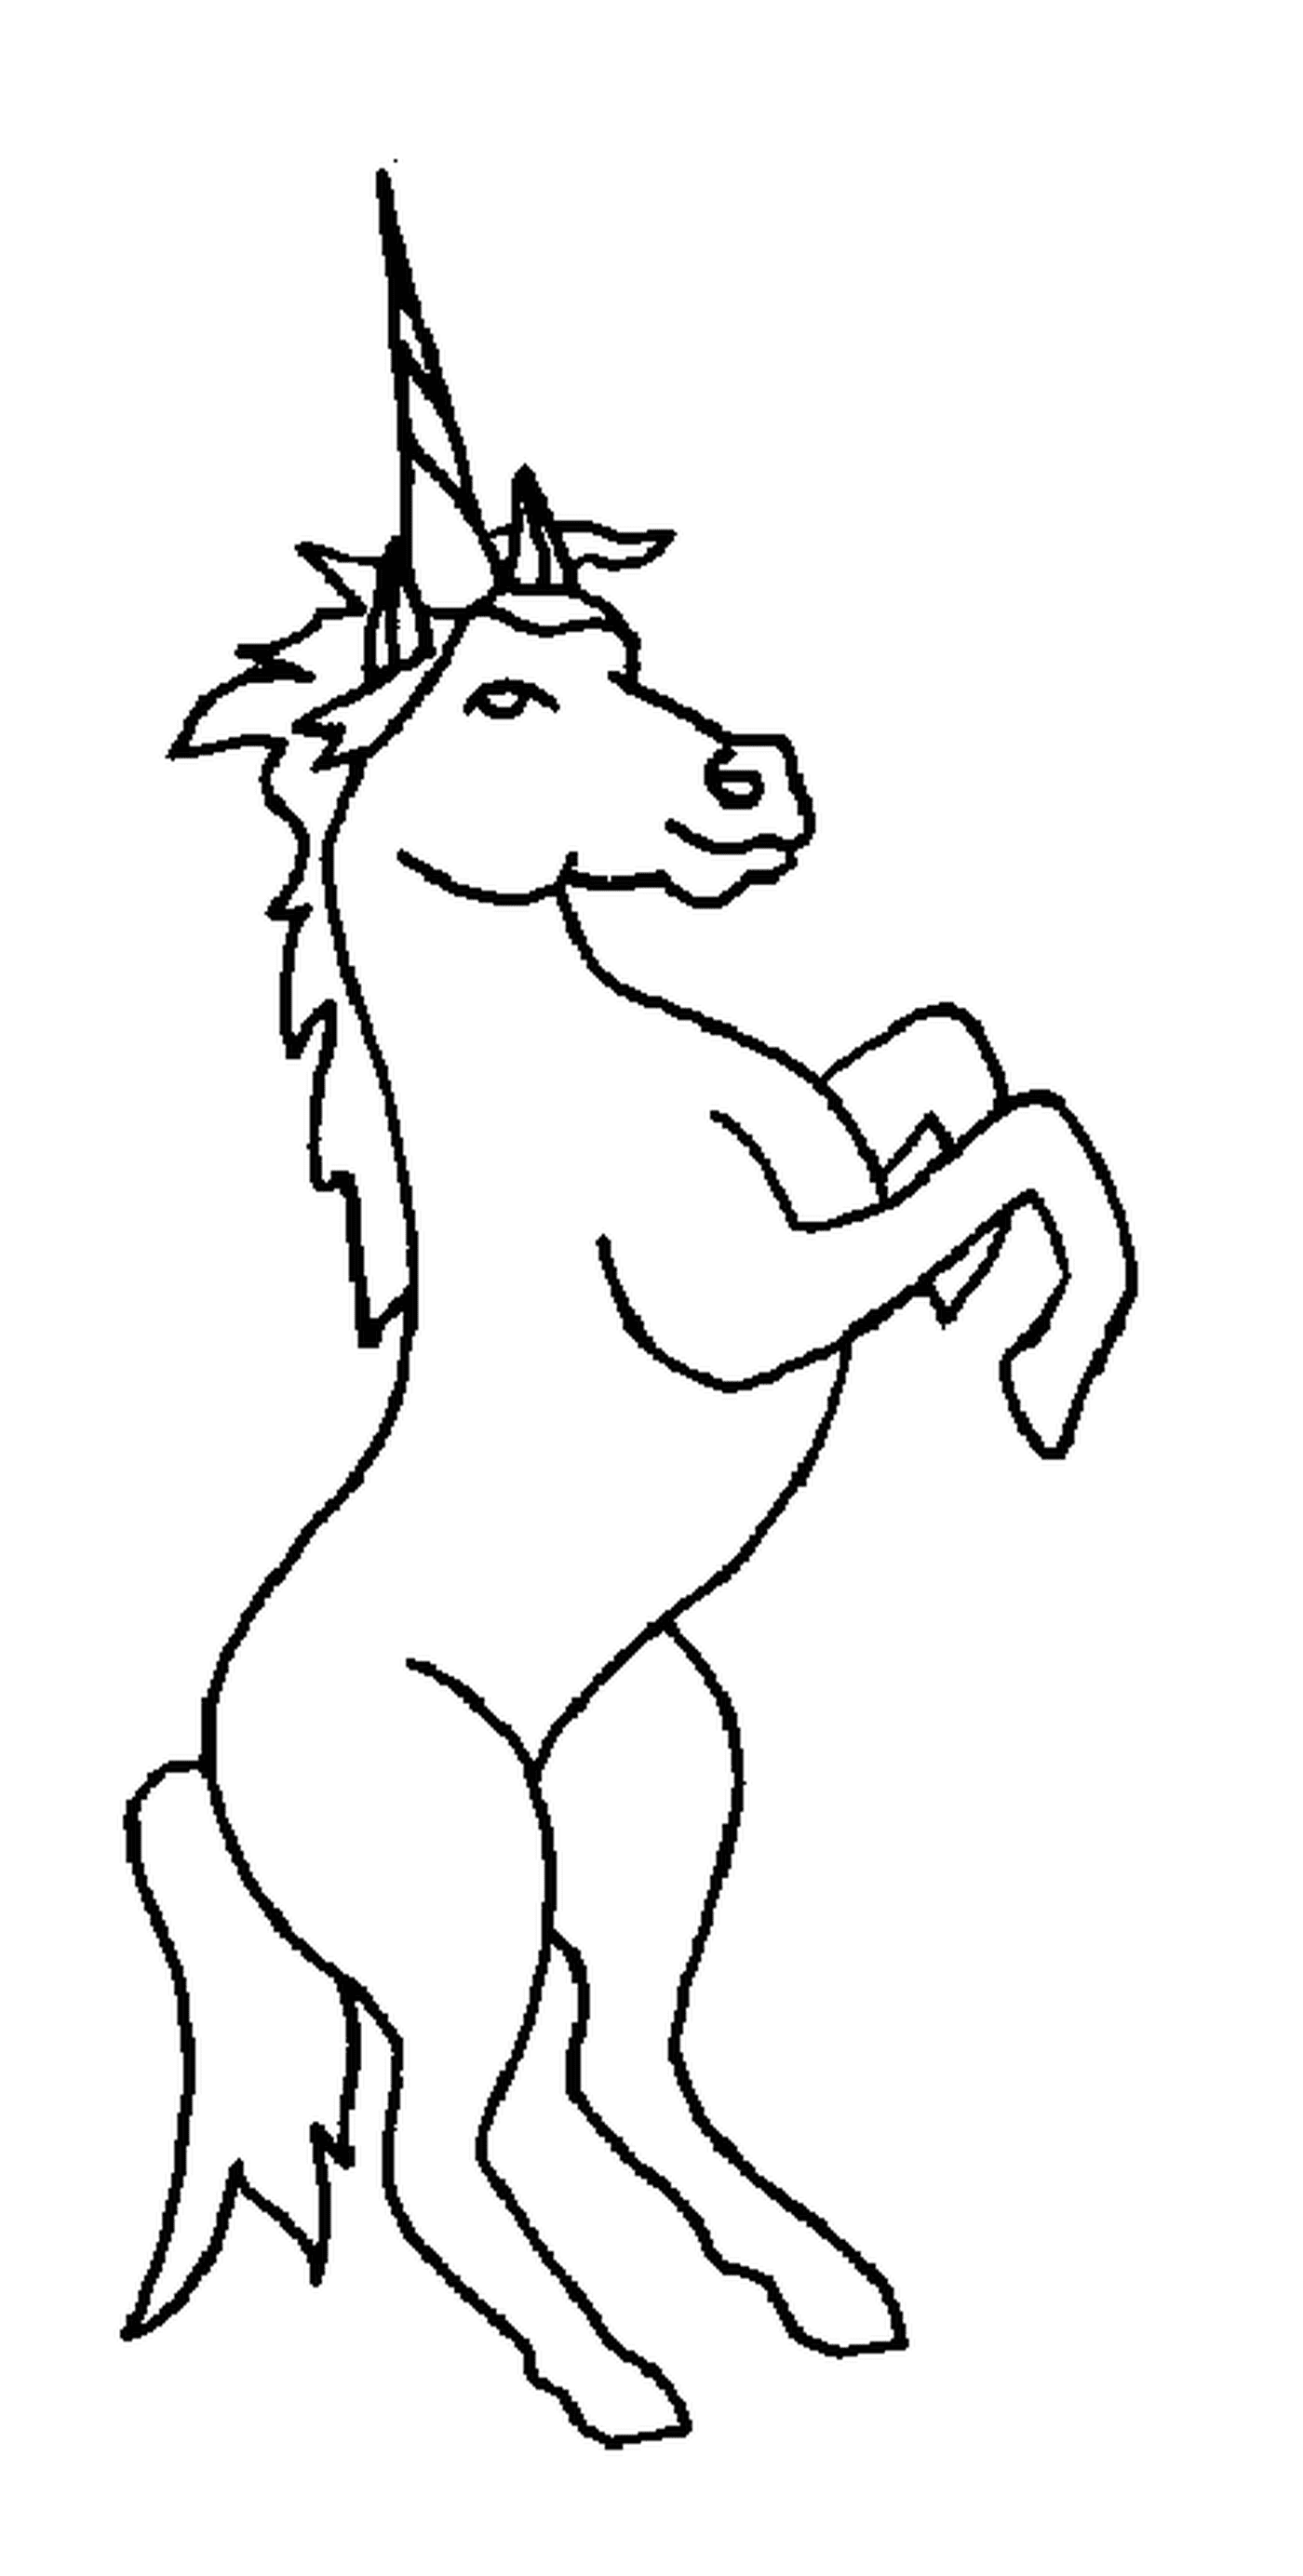  unicornio de pie sobre patas traseras 